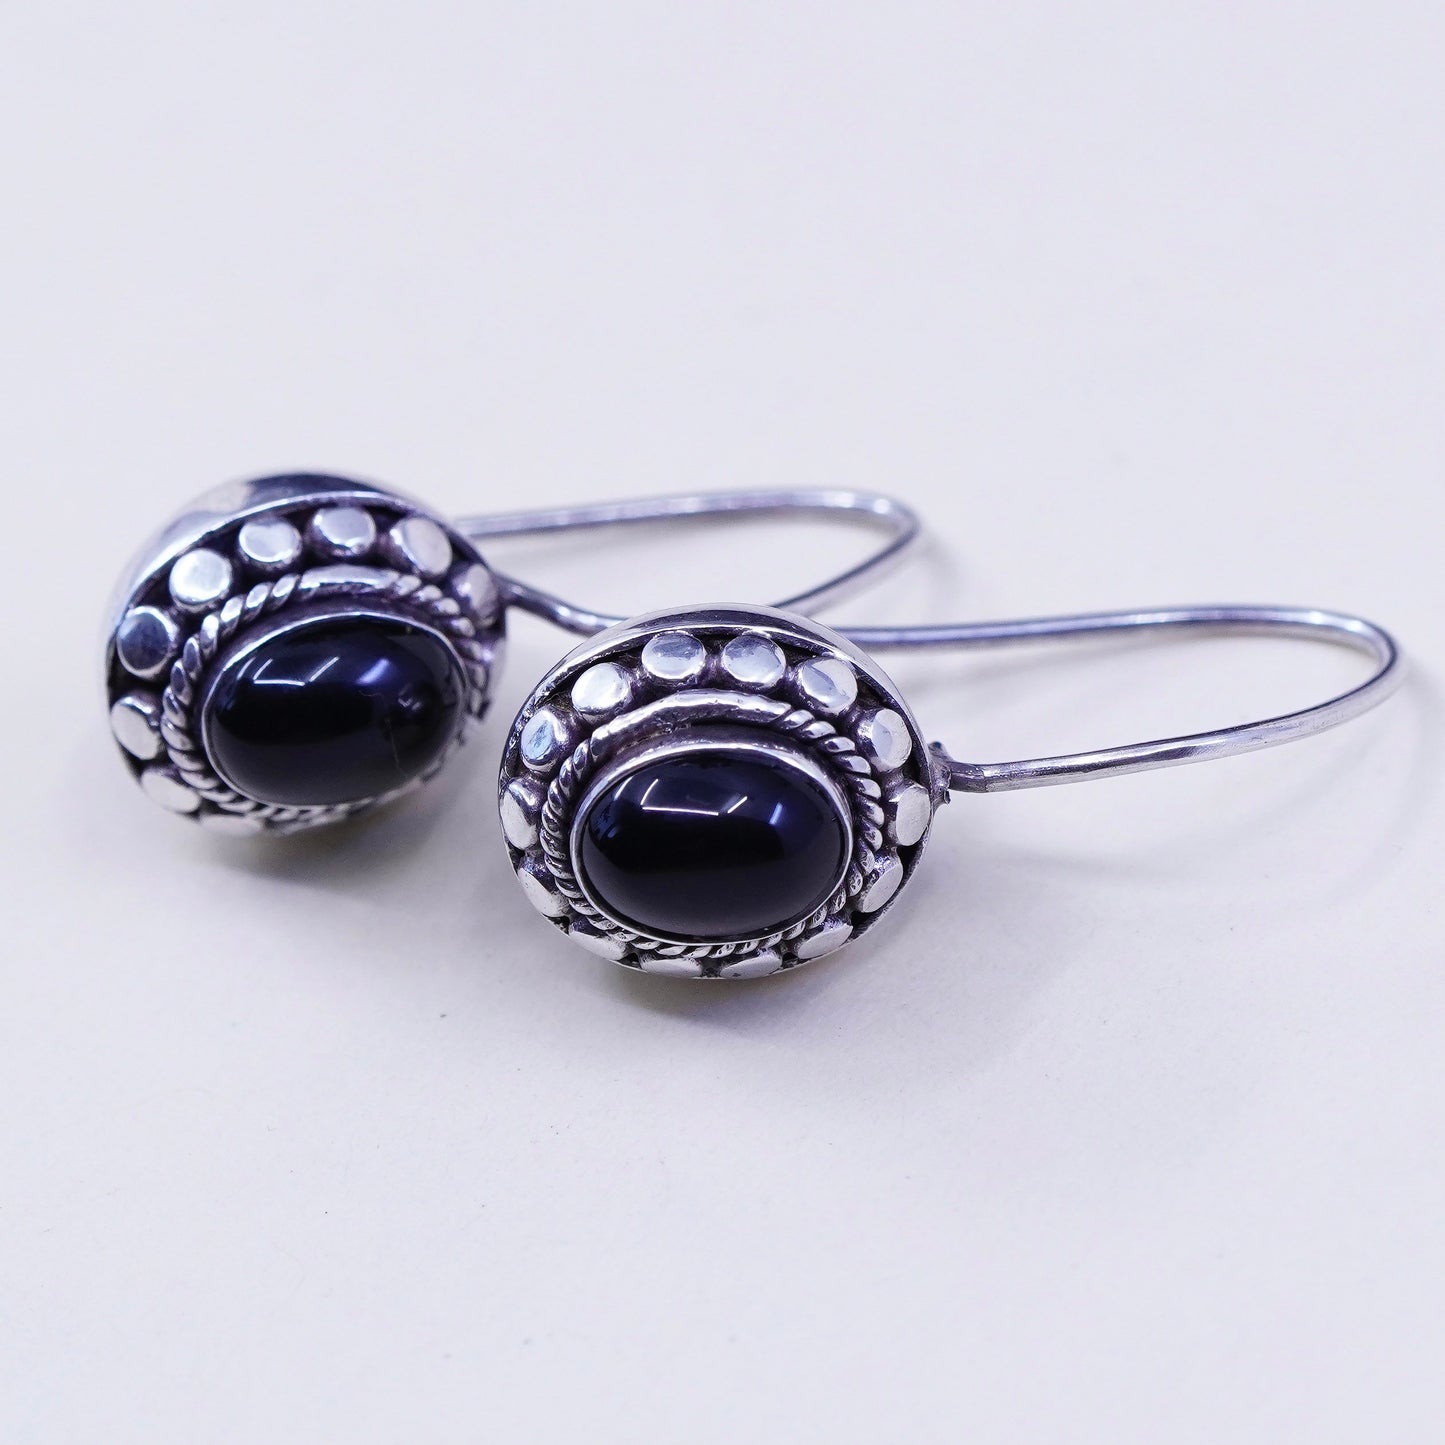 Vintage Sterling 925 silver handmade earrings with oval obsidian drops, elegant